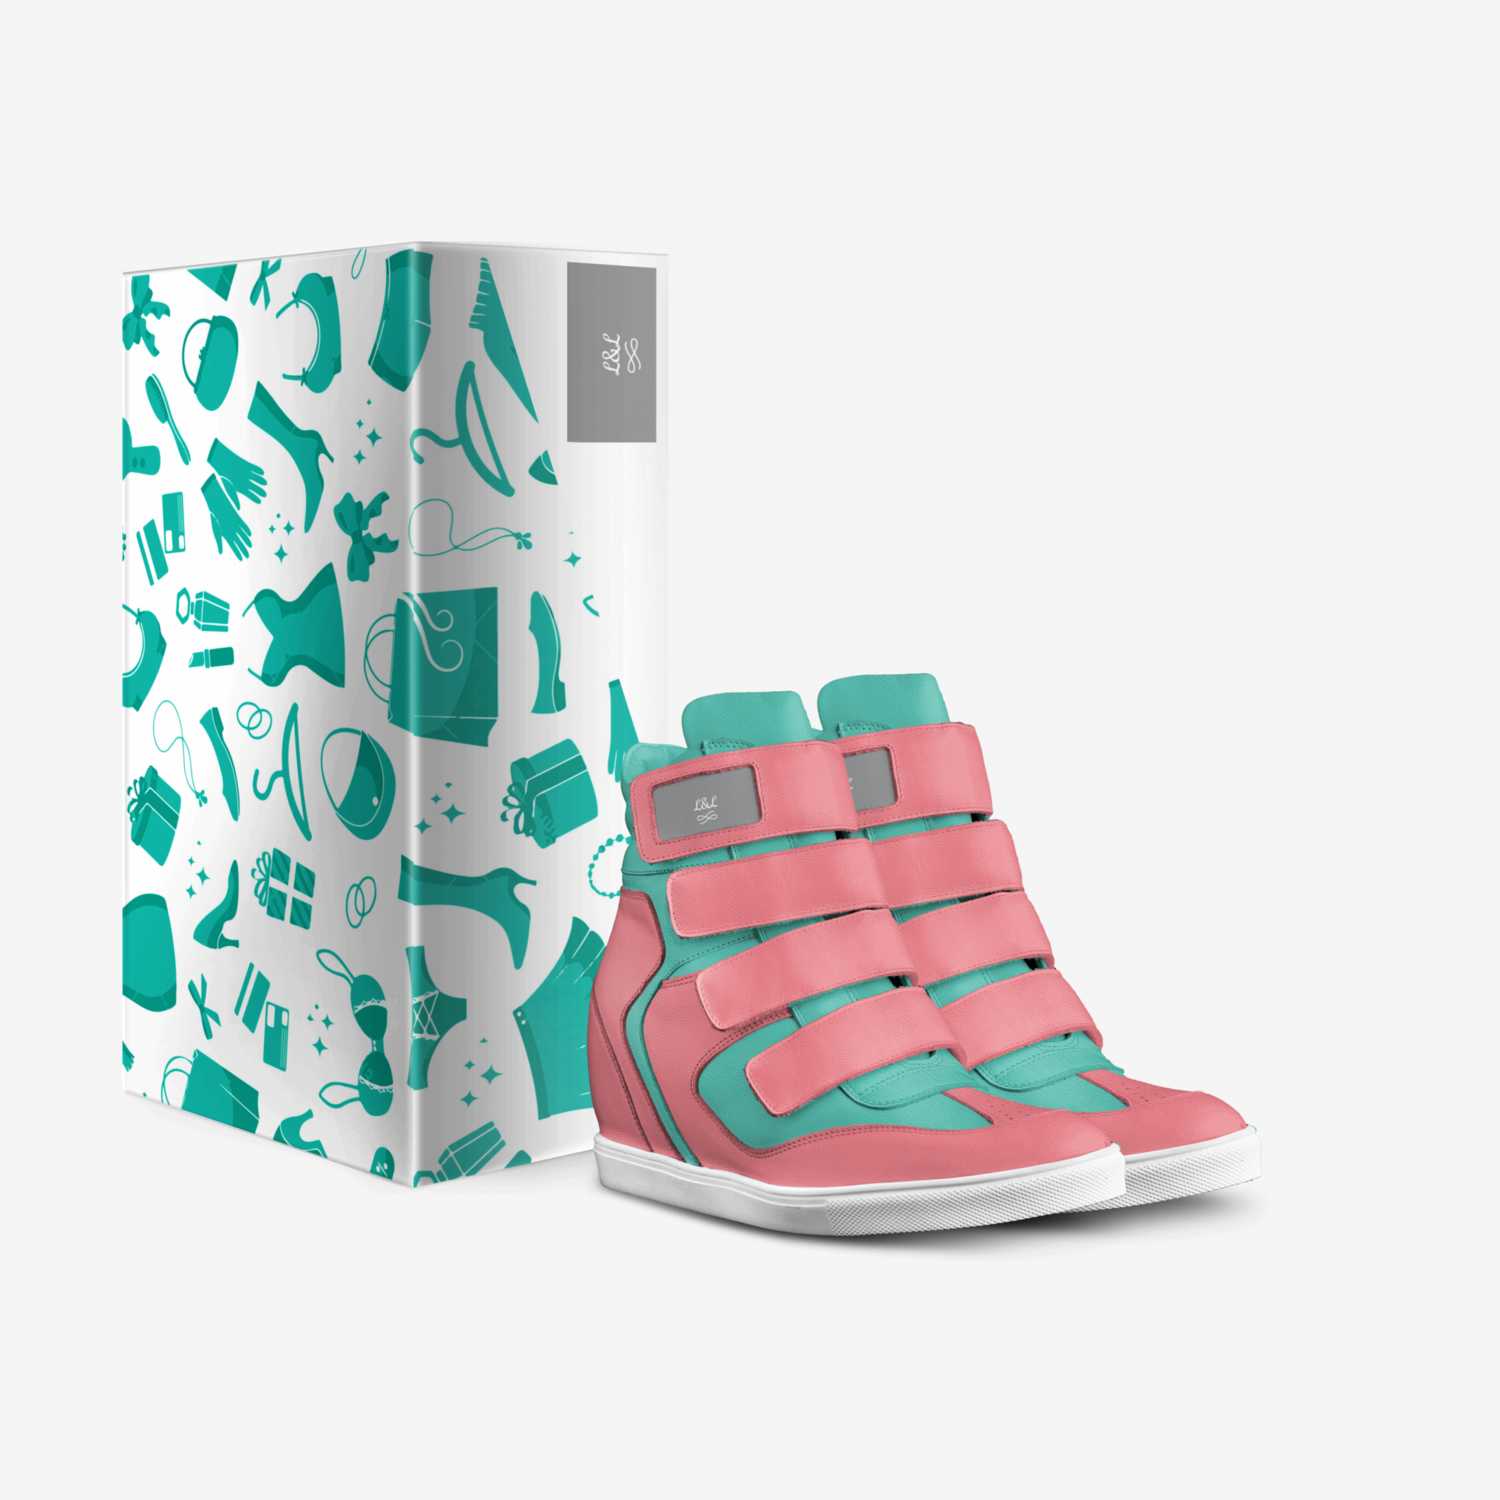 L&L custom made in Italy shoes by Jakaya Hamblin | Box view